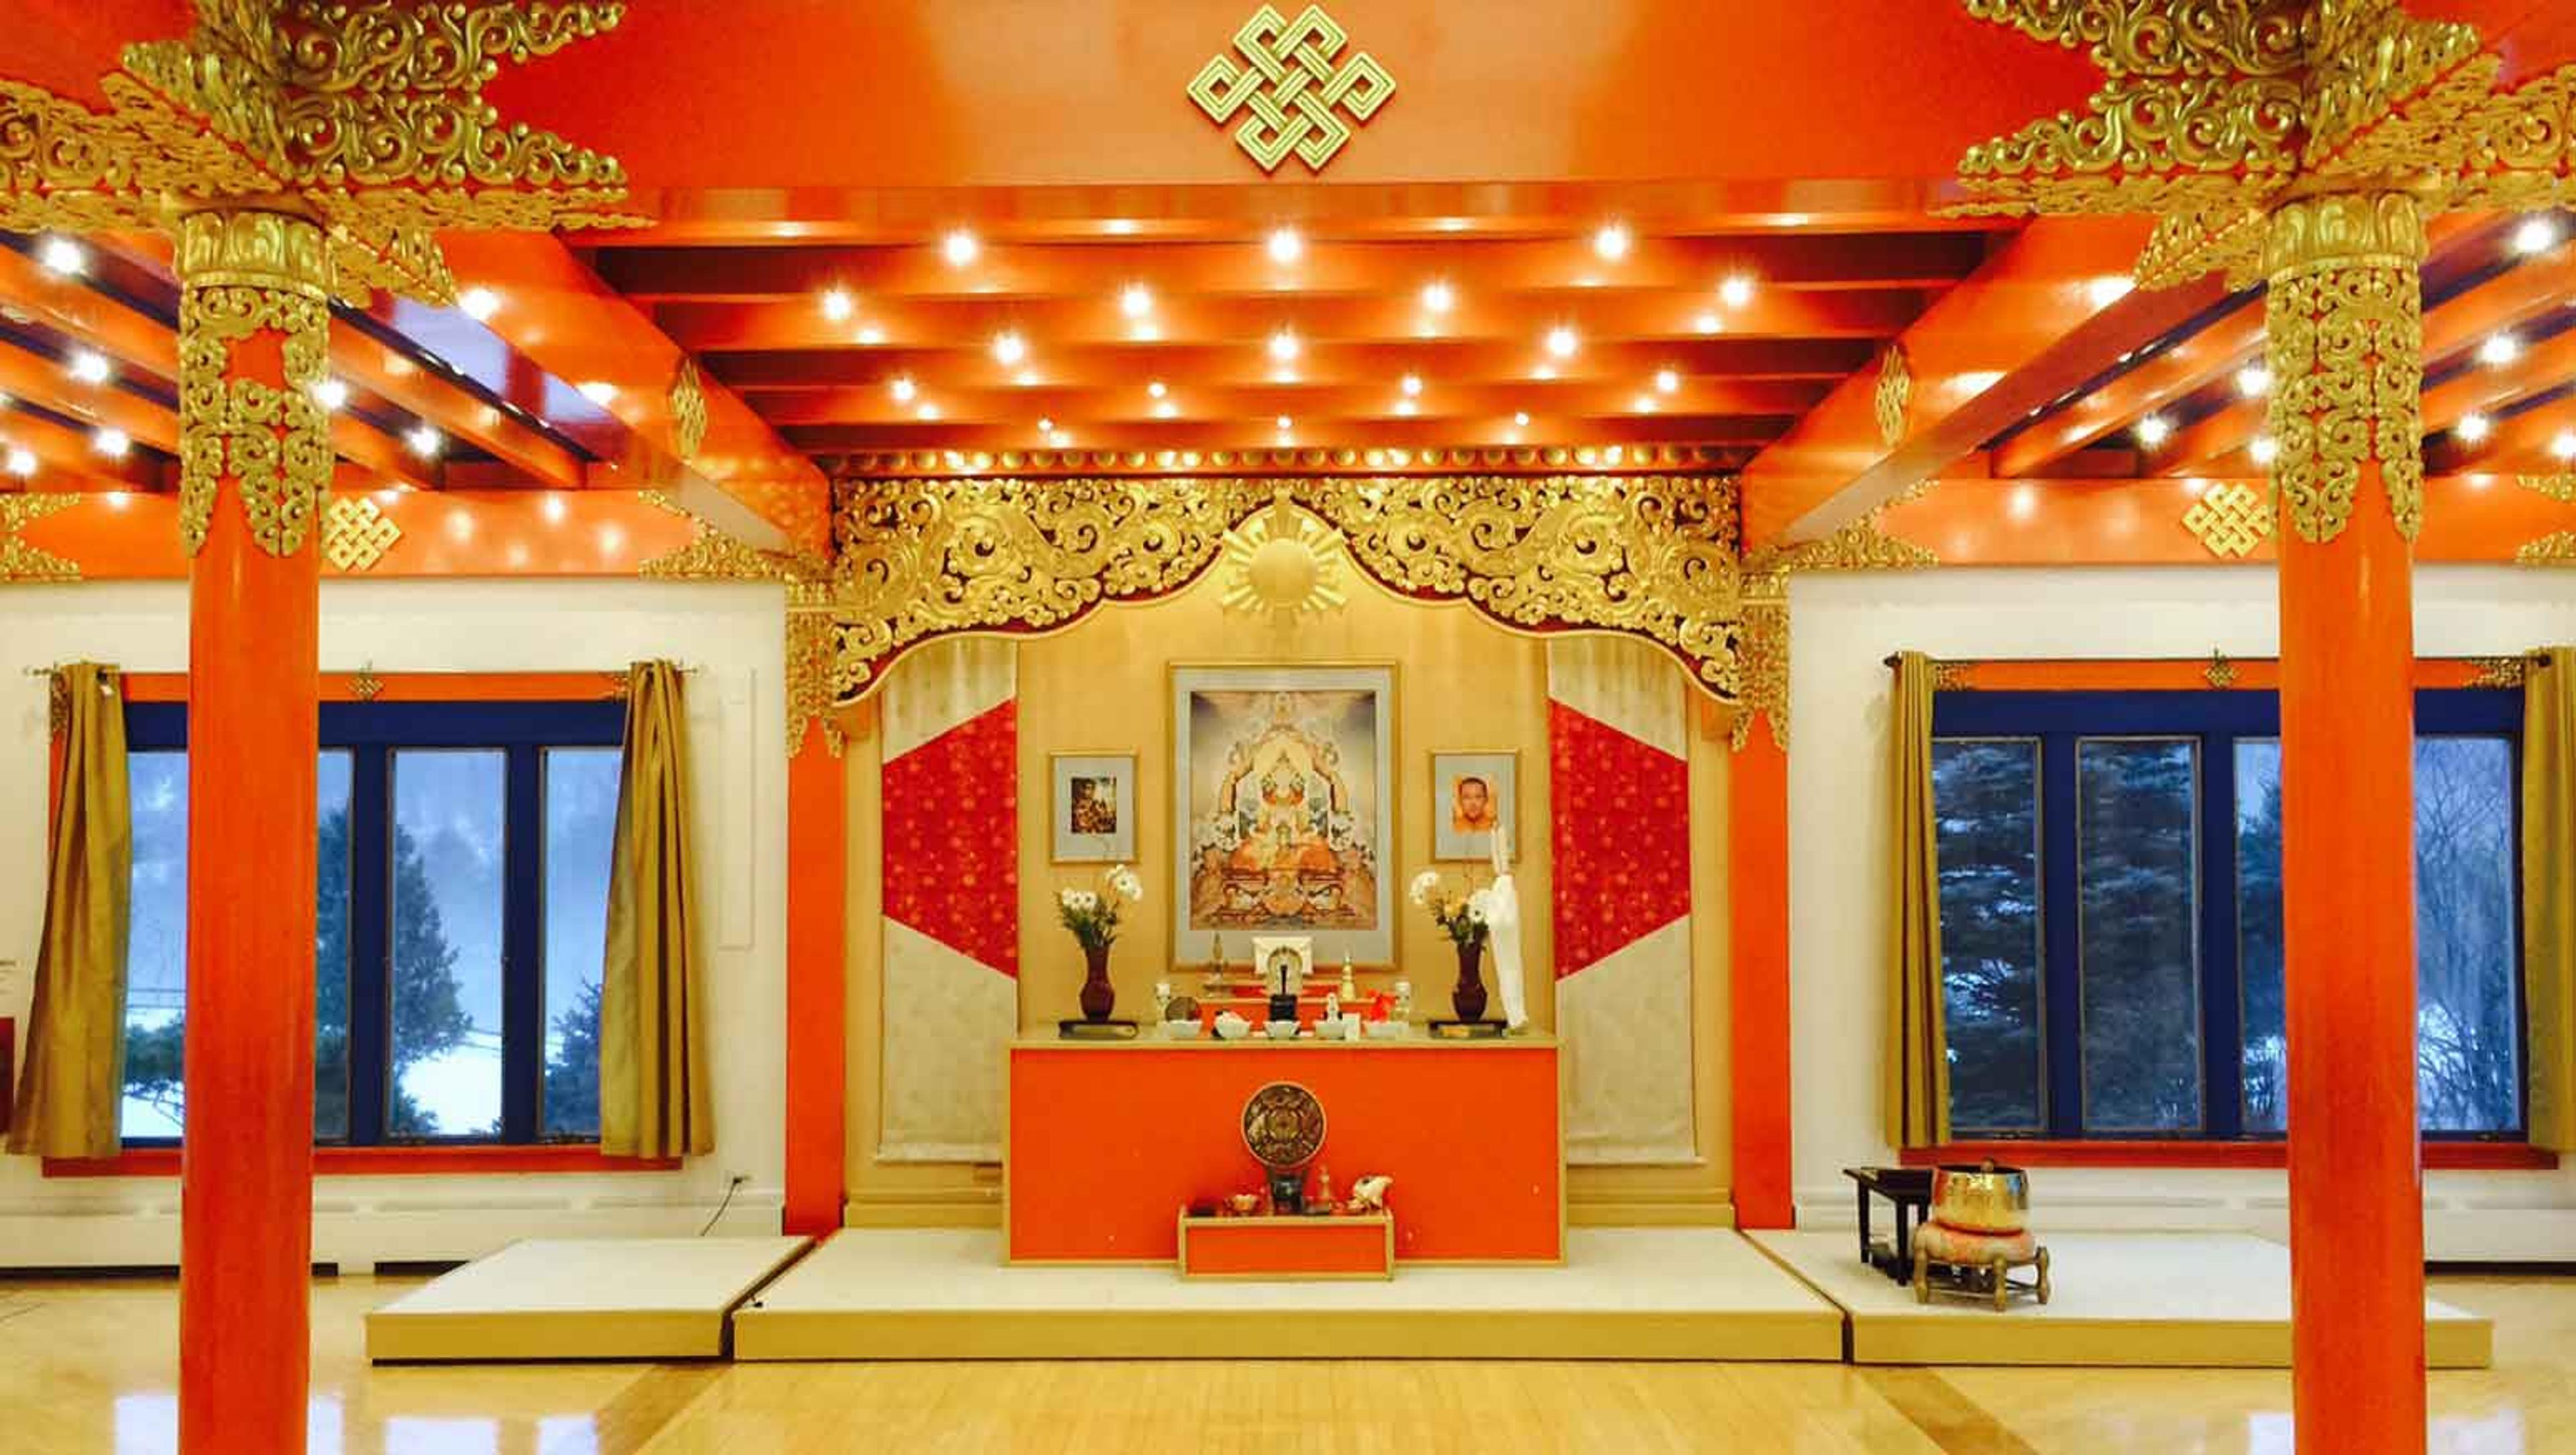 Meditation Retreat Center Shrine Room